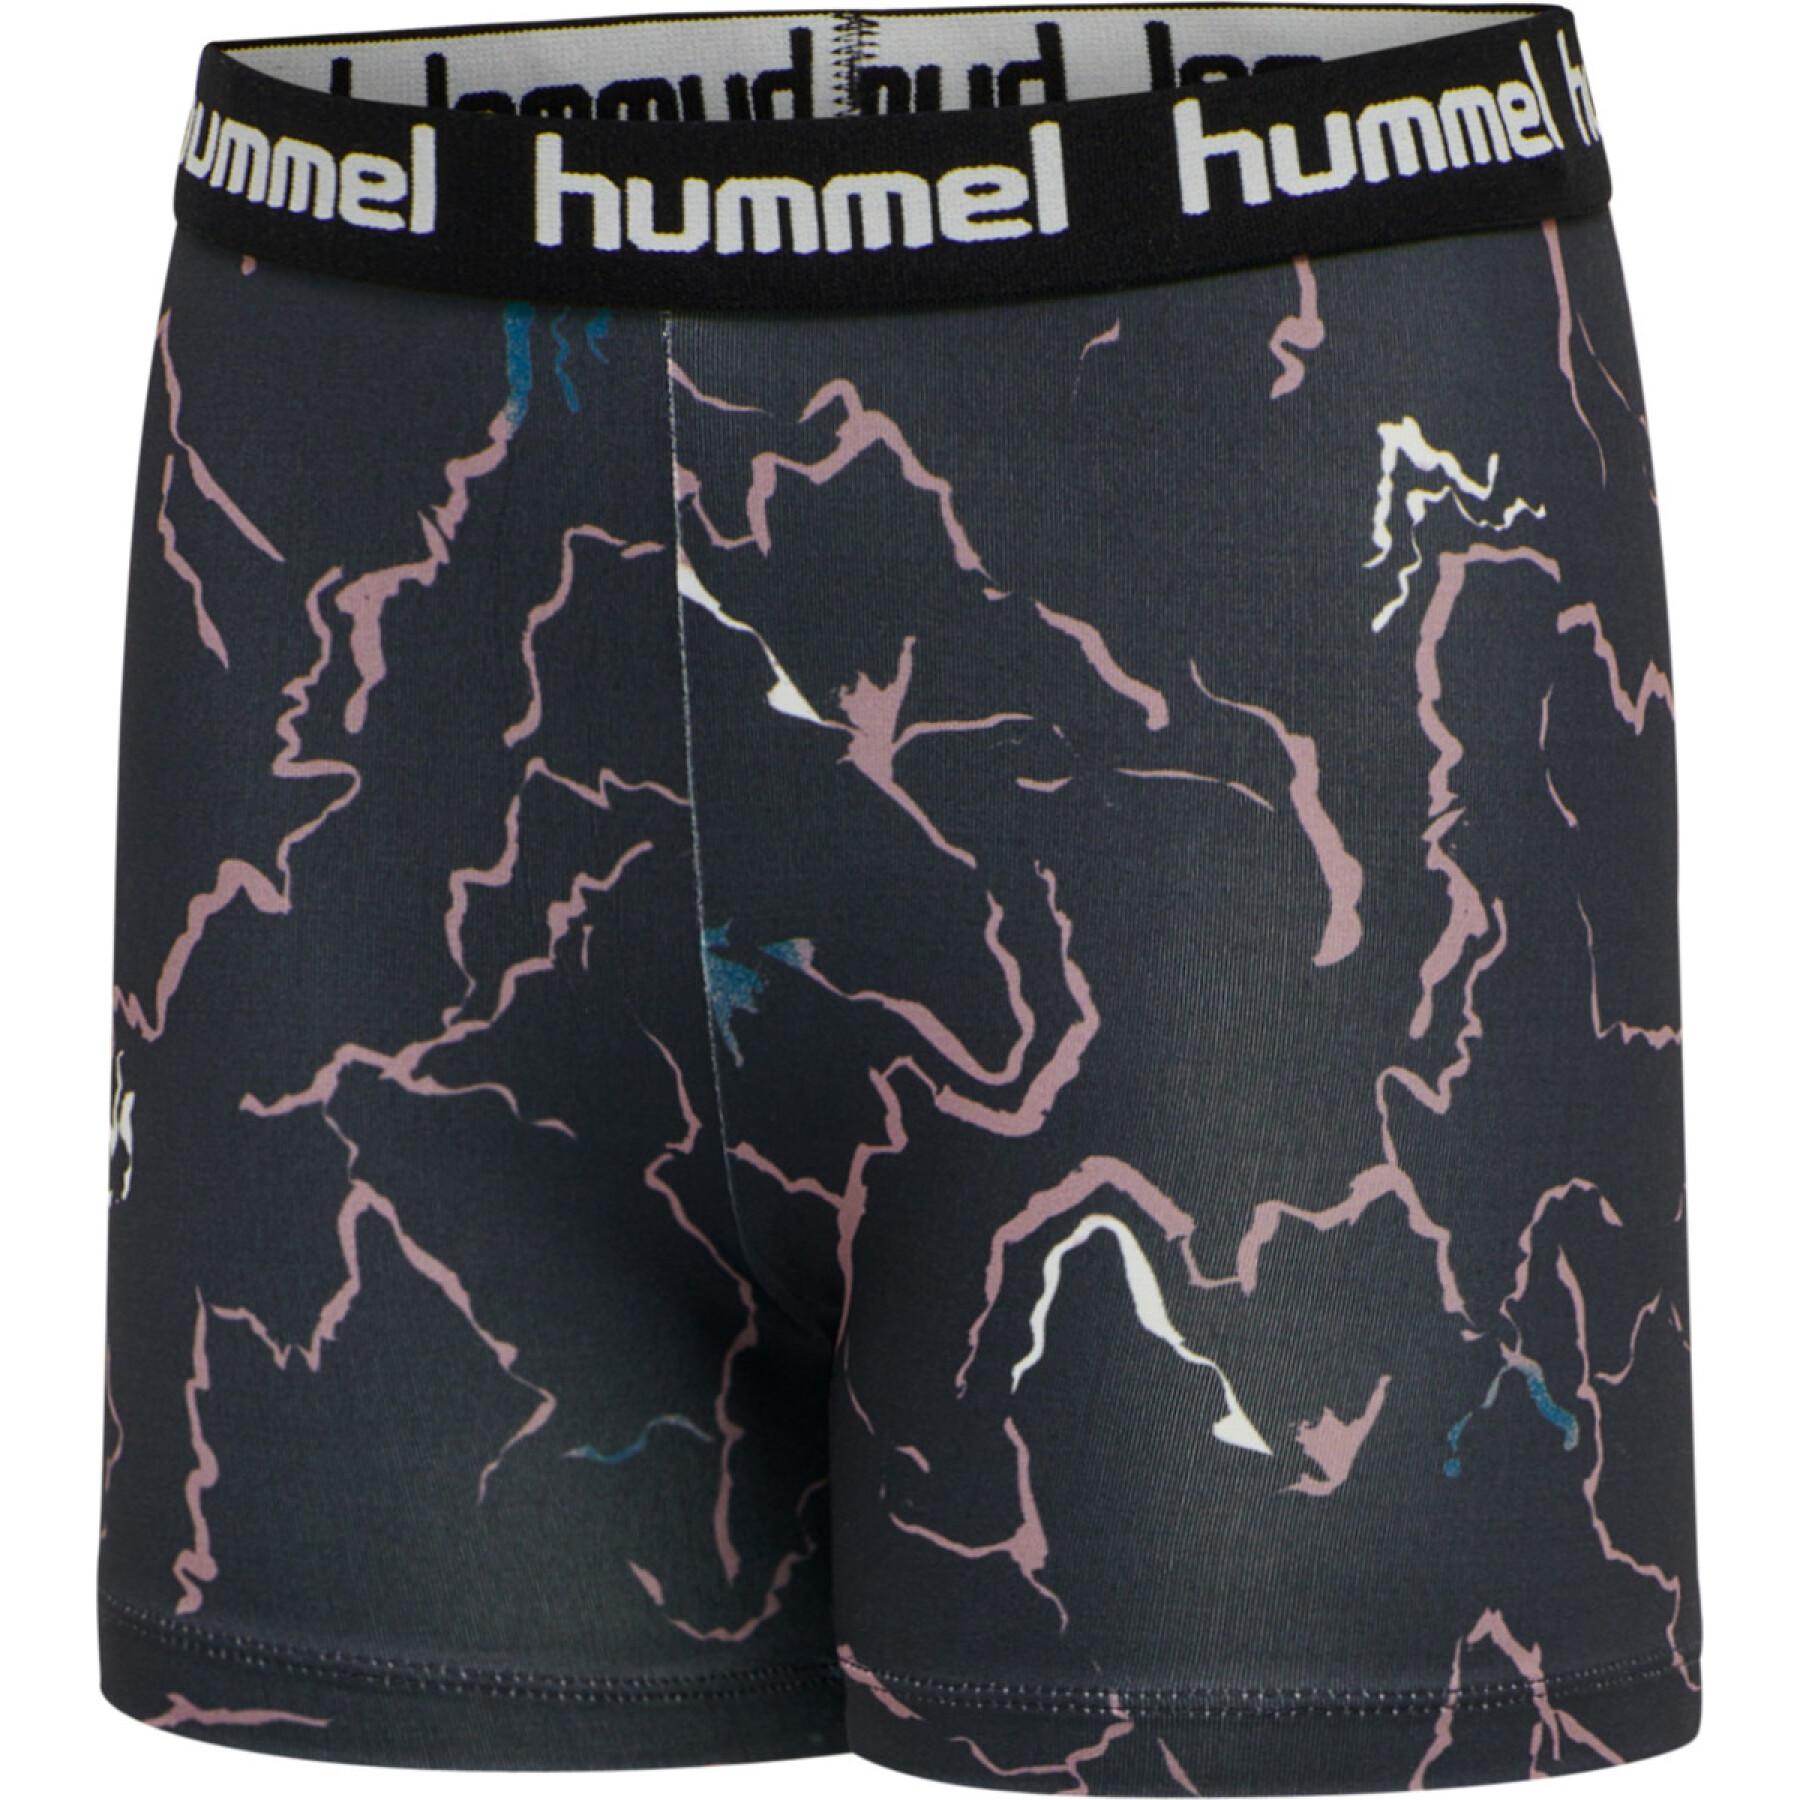 Children's shorts Hummel hmlmimmi tight